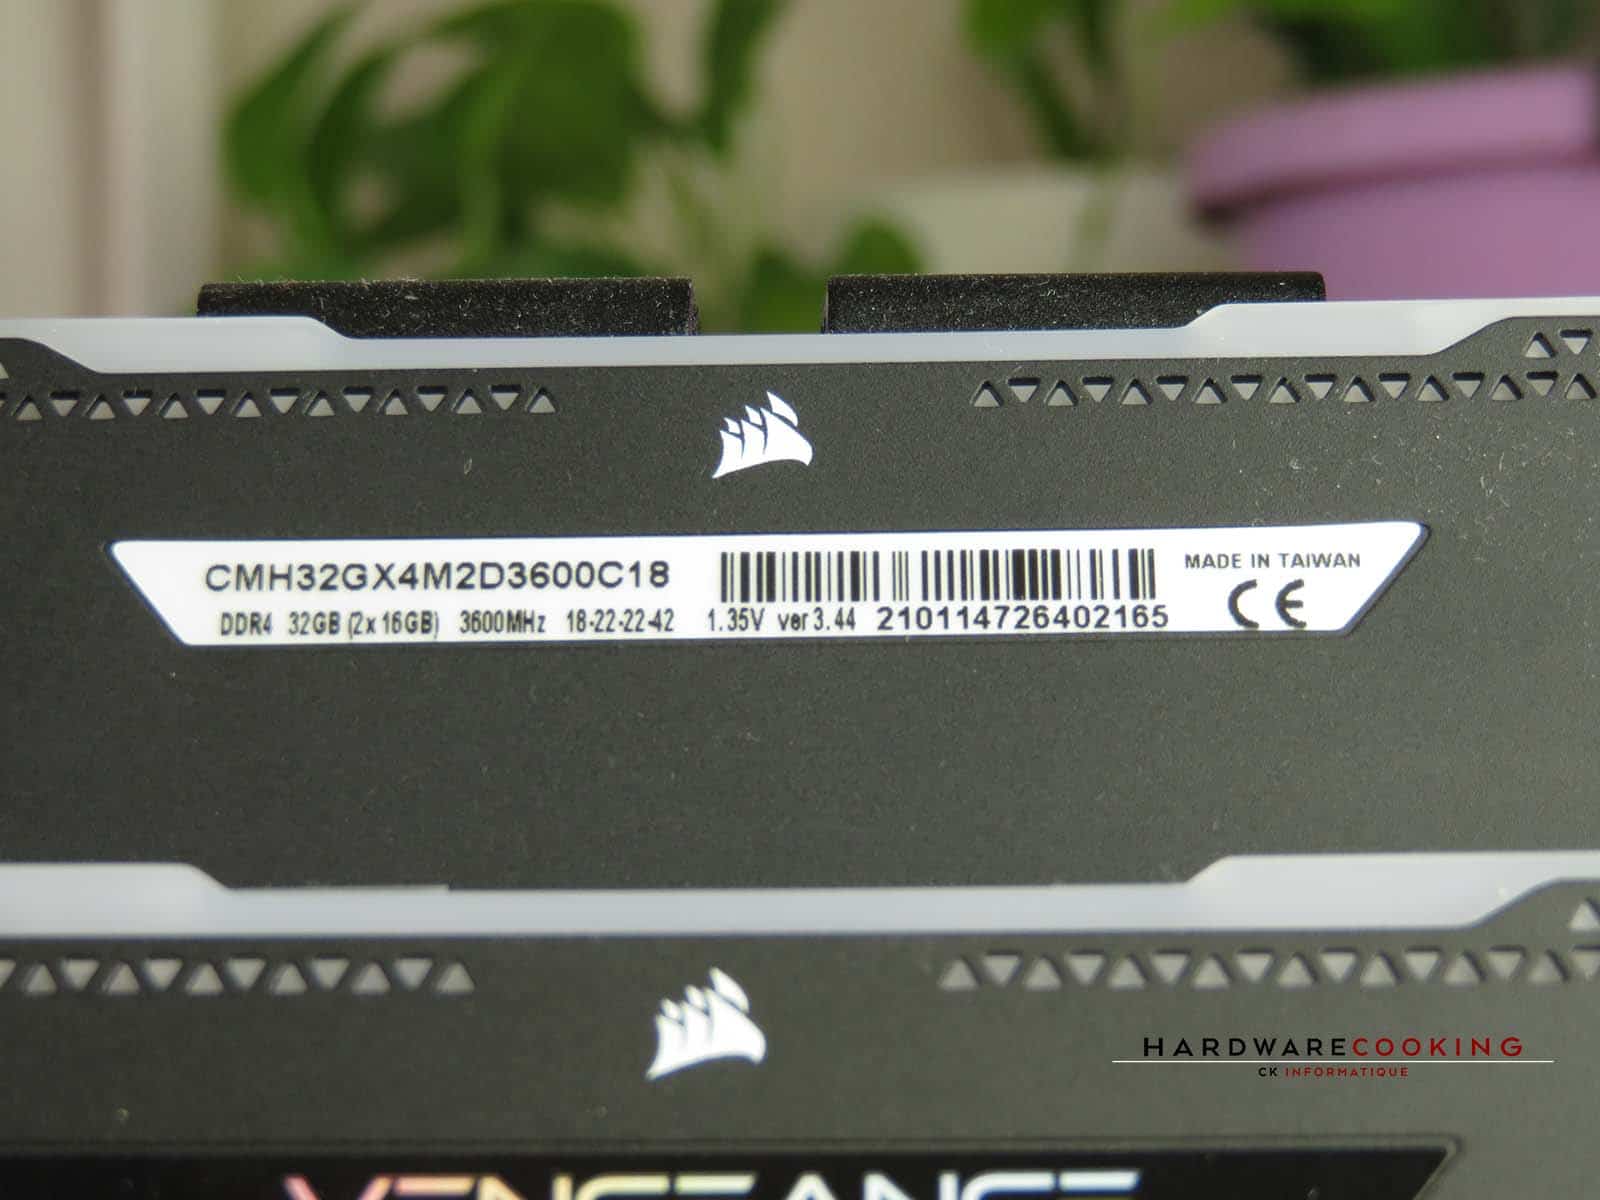 CORSAIR Vengeance RGB Pro SL 32Go (2x16Go) DDR4 3600MHz CL18